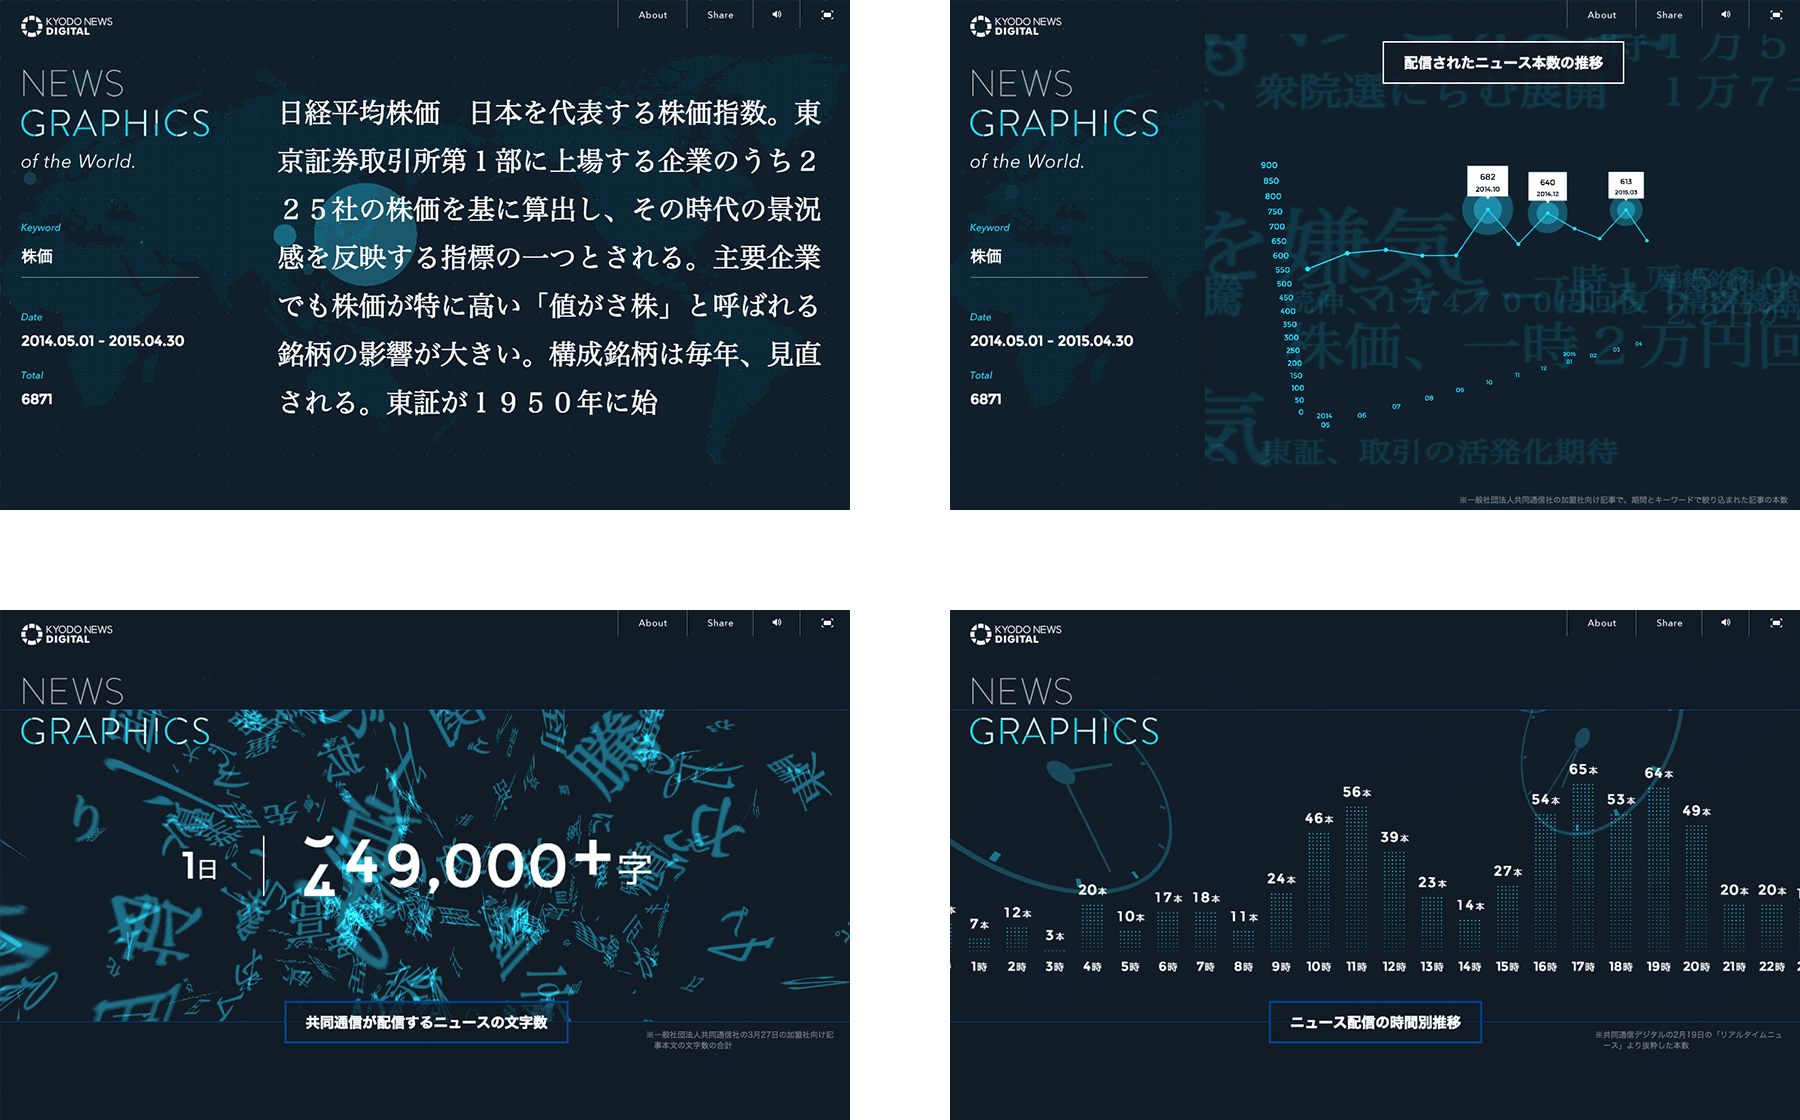 Kyodo News Digital / Corporate Website